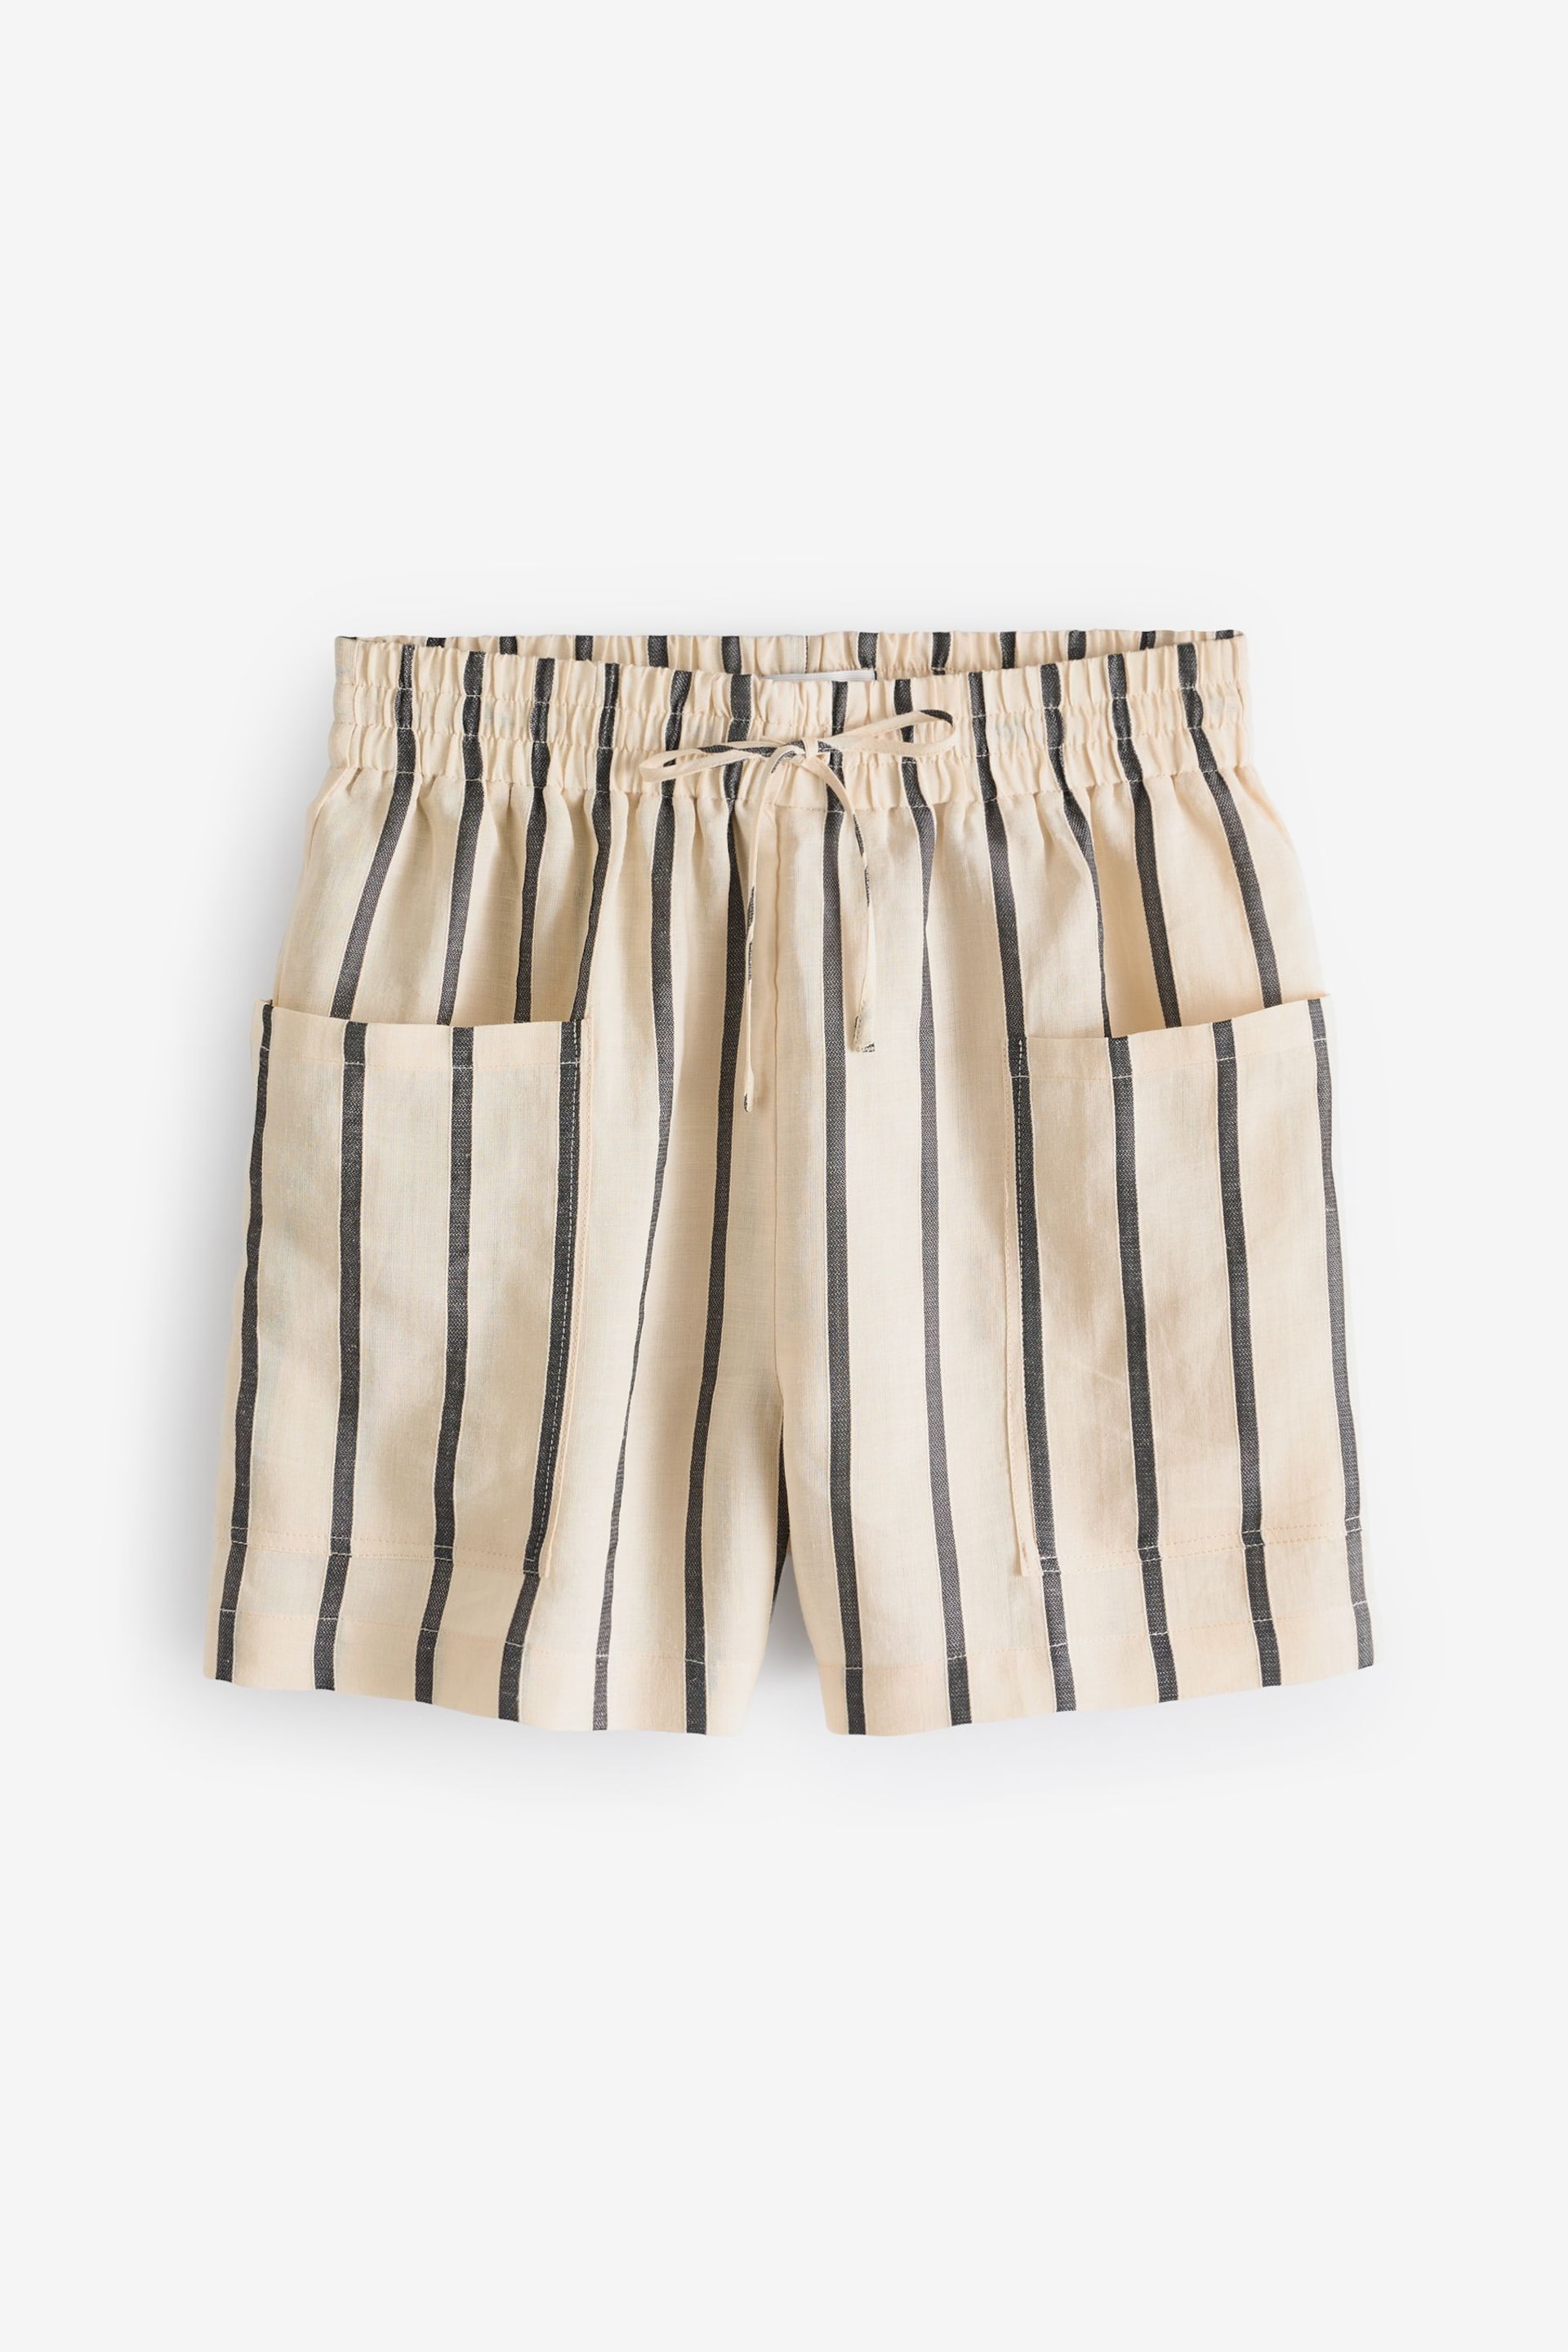 Ecru Premium Ramie Blend Stripe Boy Shorts - Image 5 of 8